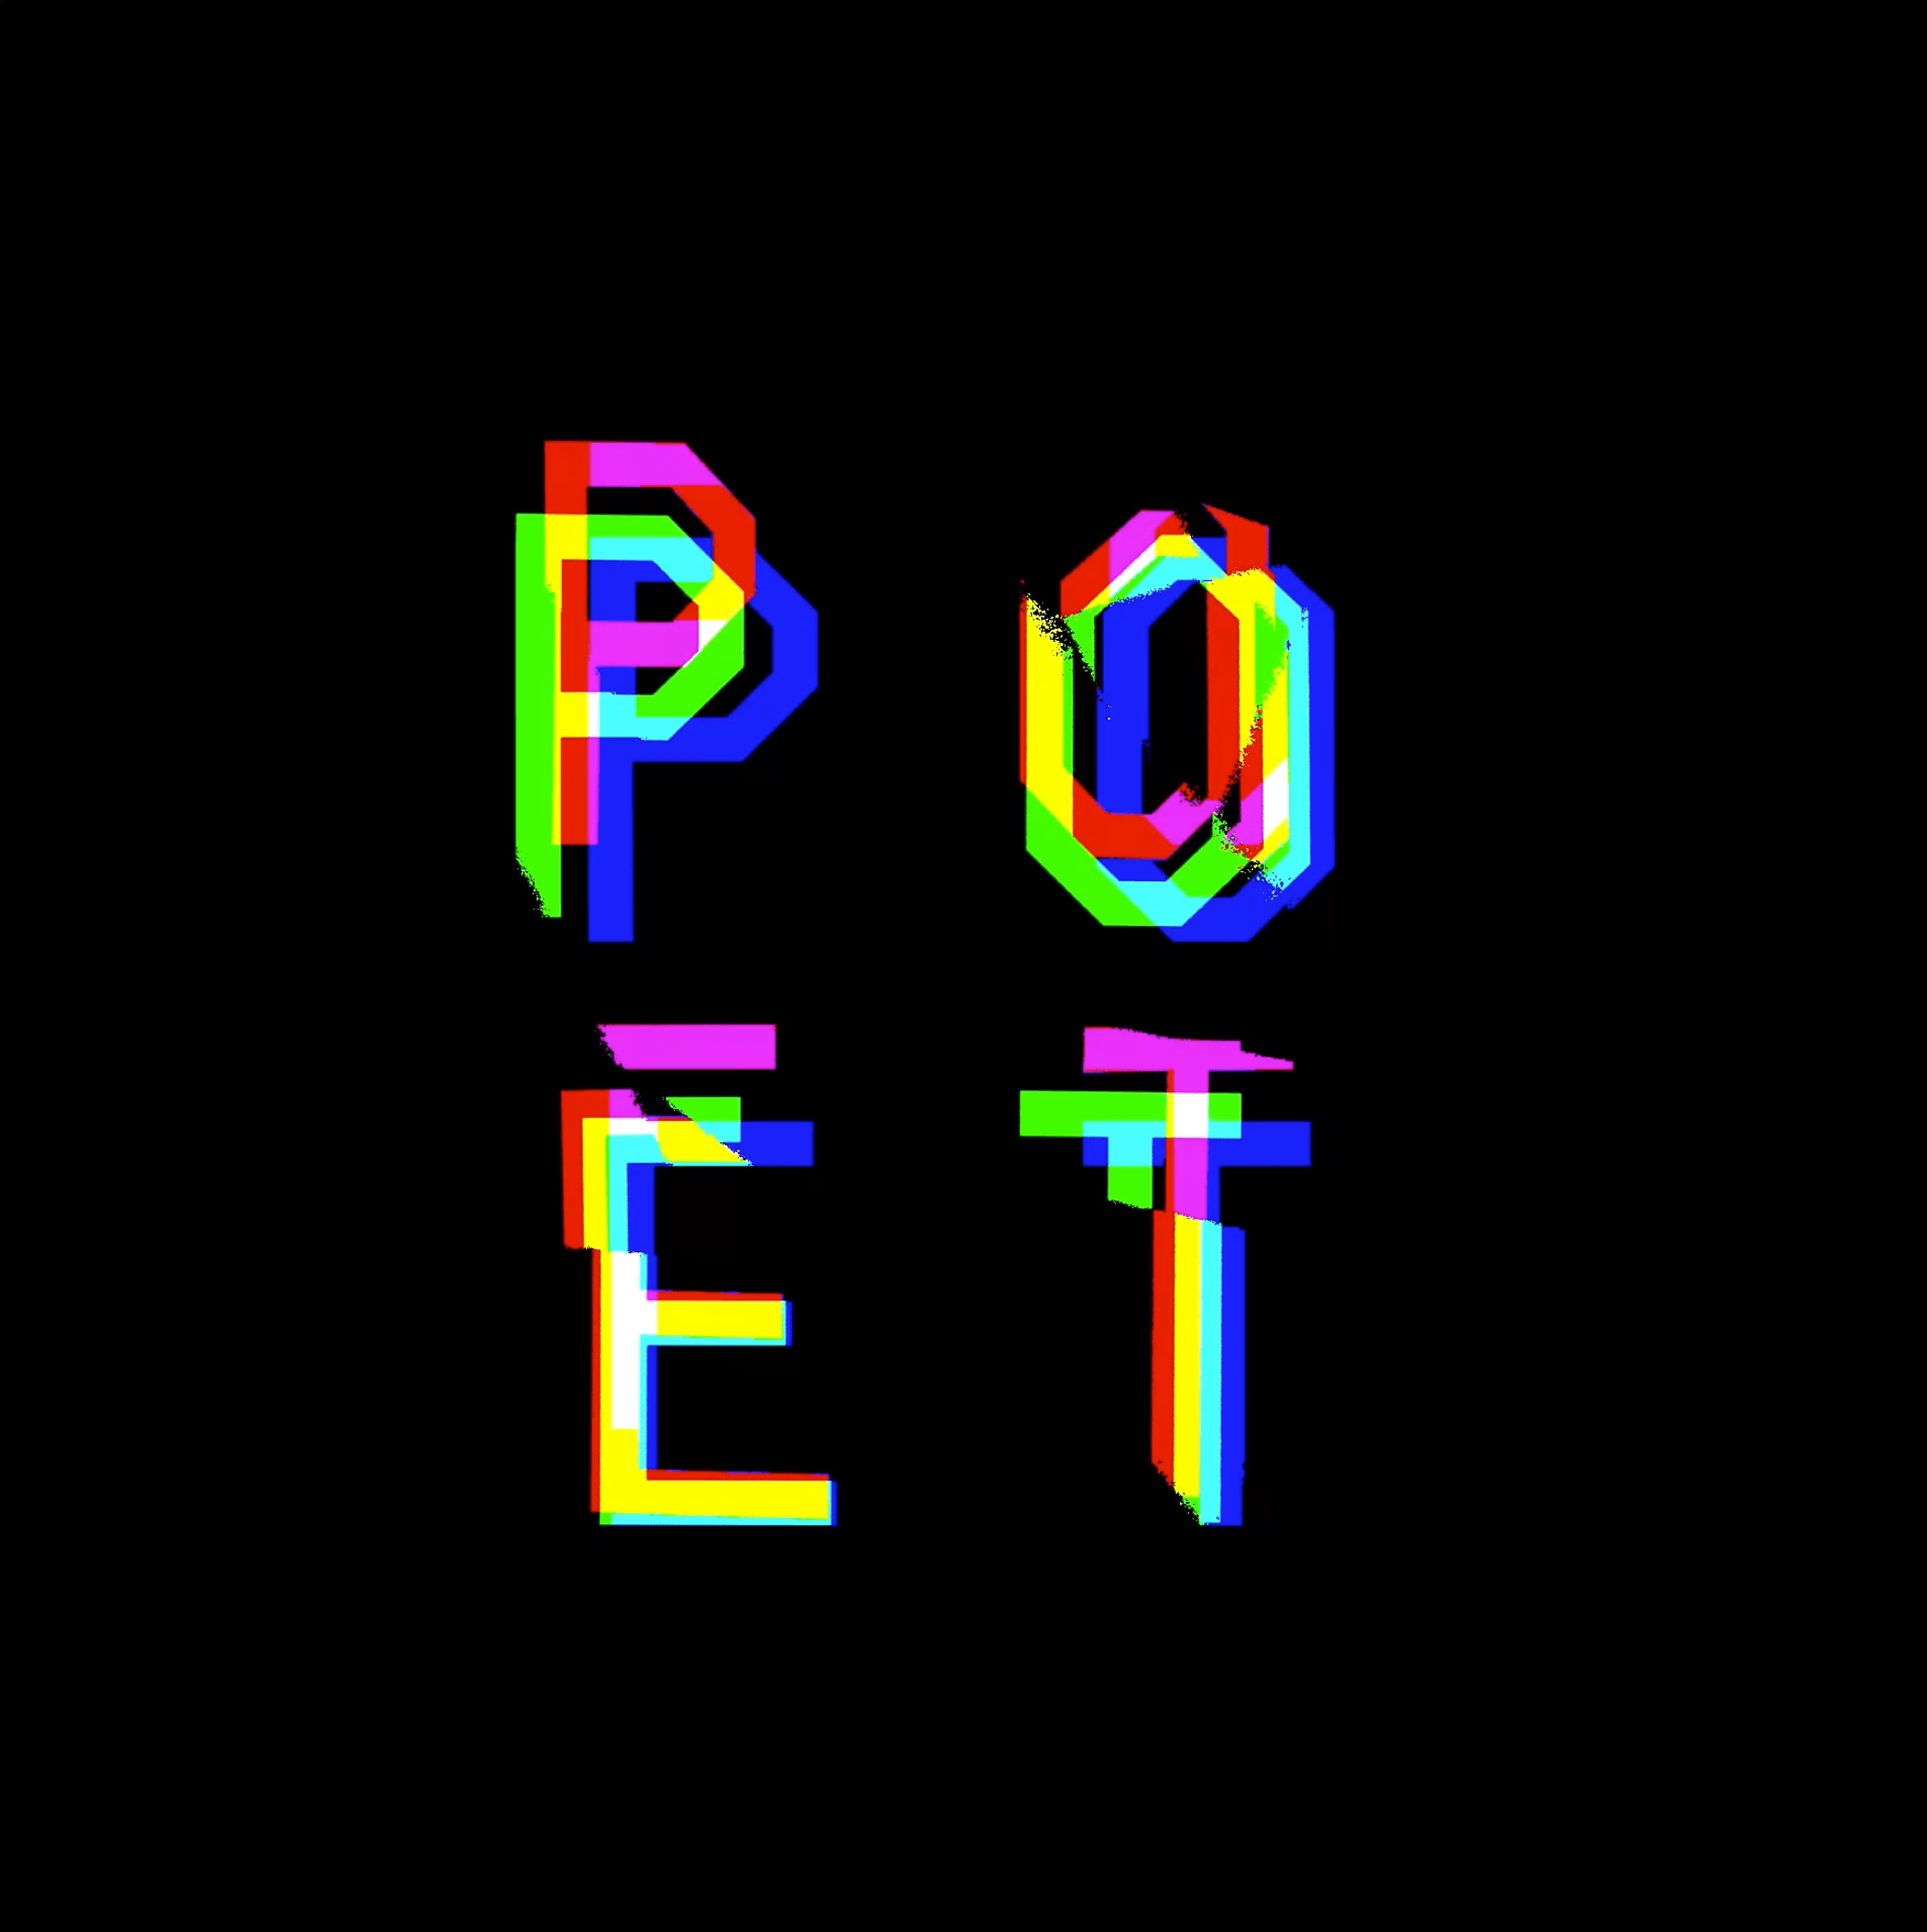 P.O.E.T.: Protocol Outputting Exclamatory Tags